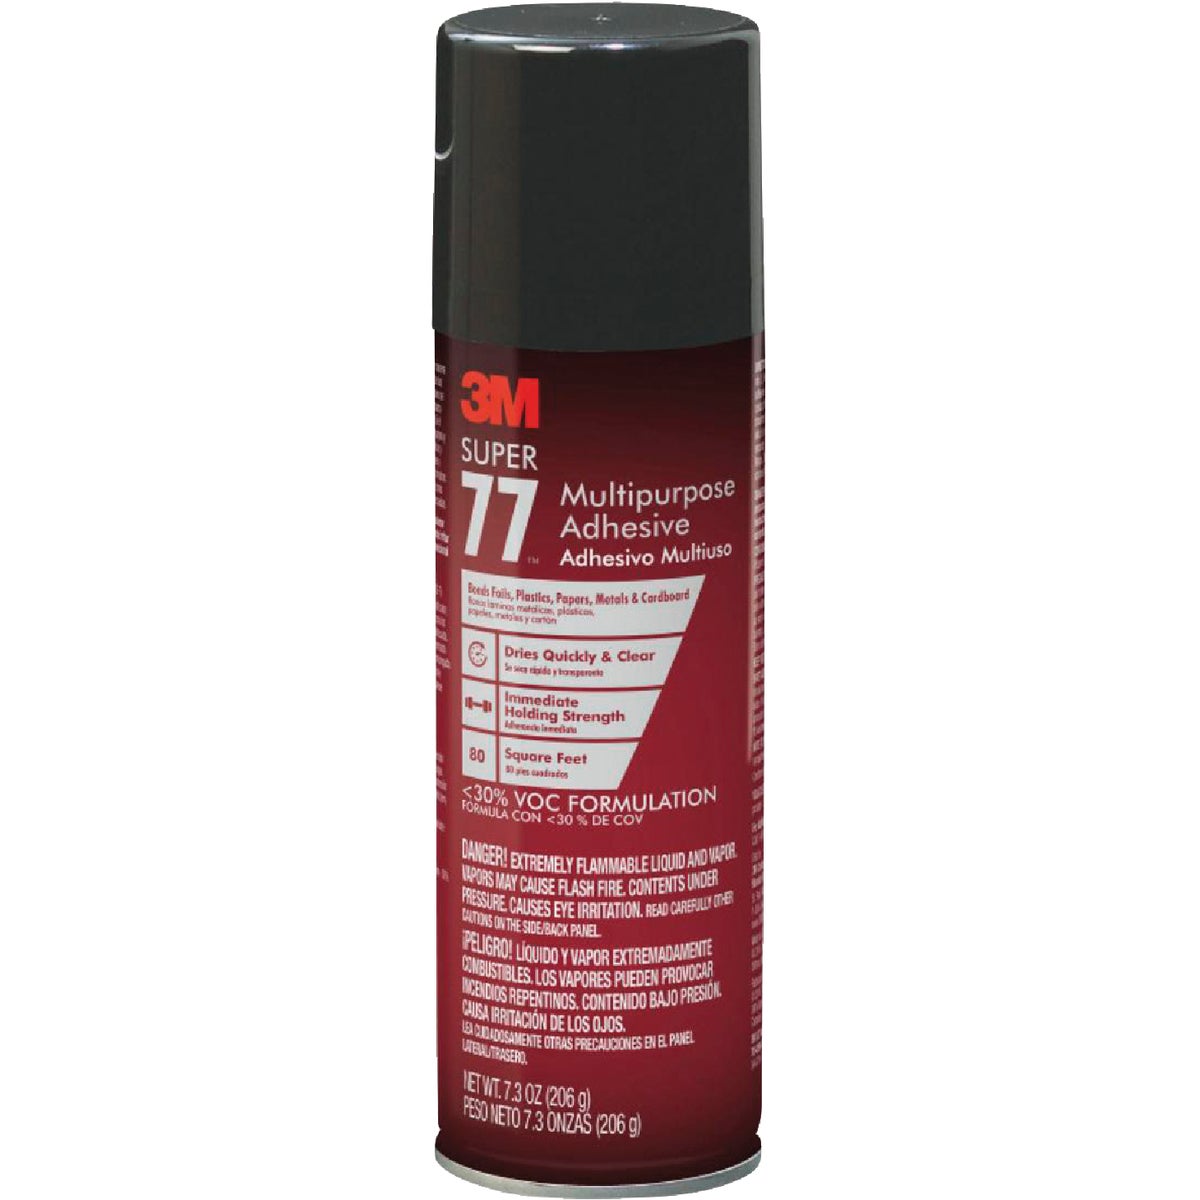 Item 314277, Versatile and forgiving, our 3M Super 77 Multipurpose Spray Adhesive forms 